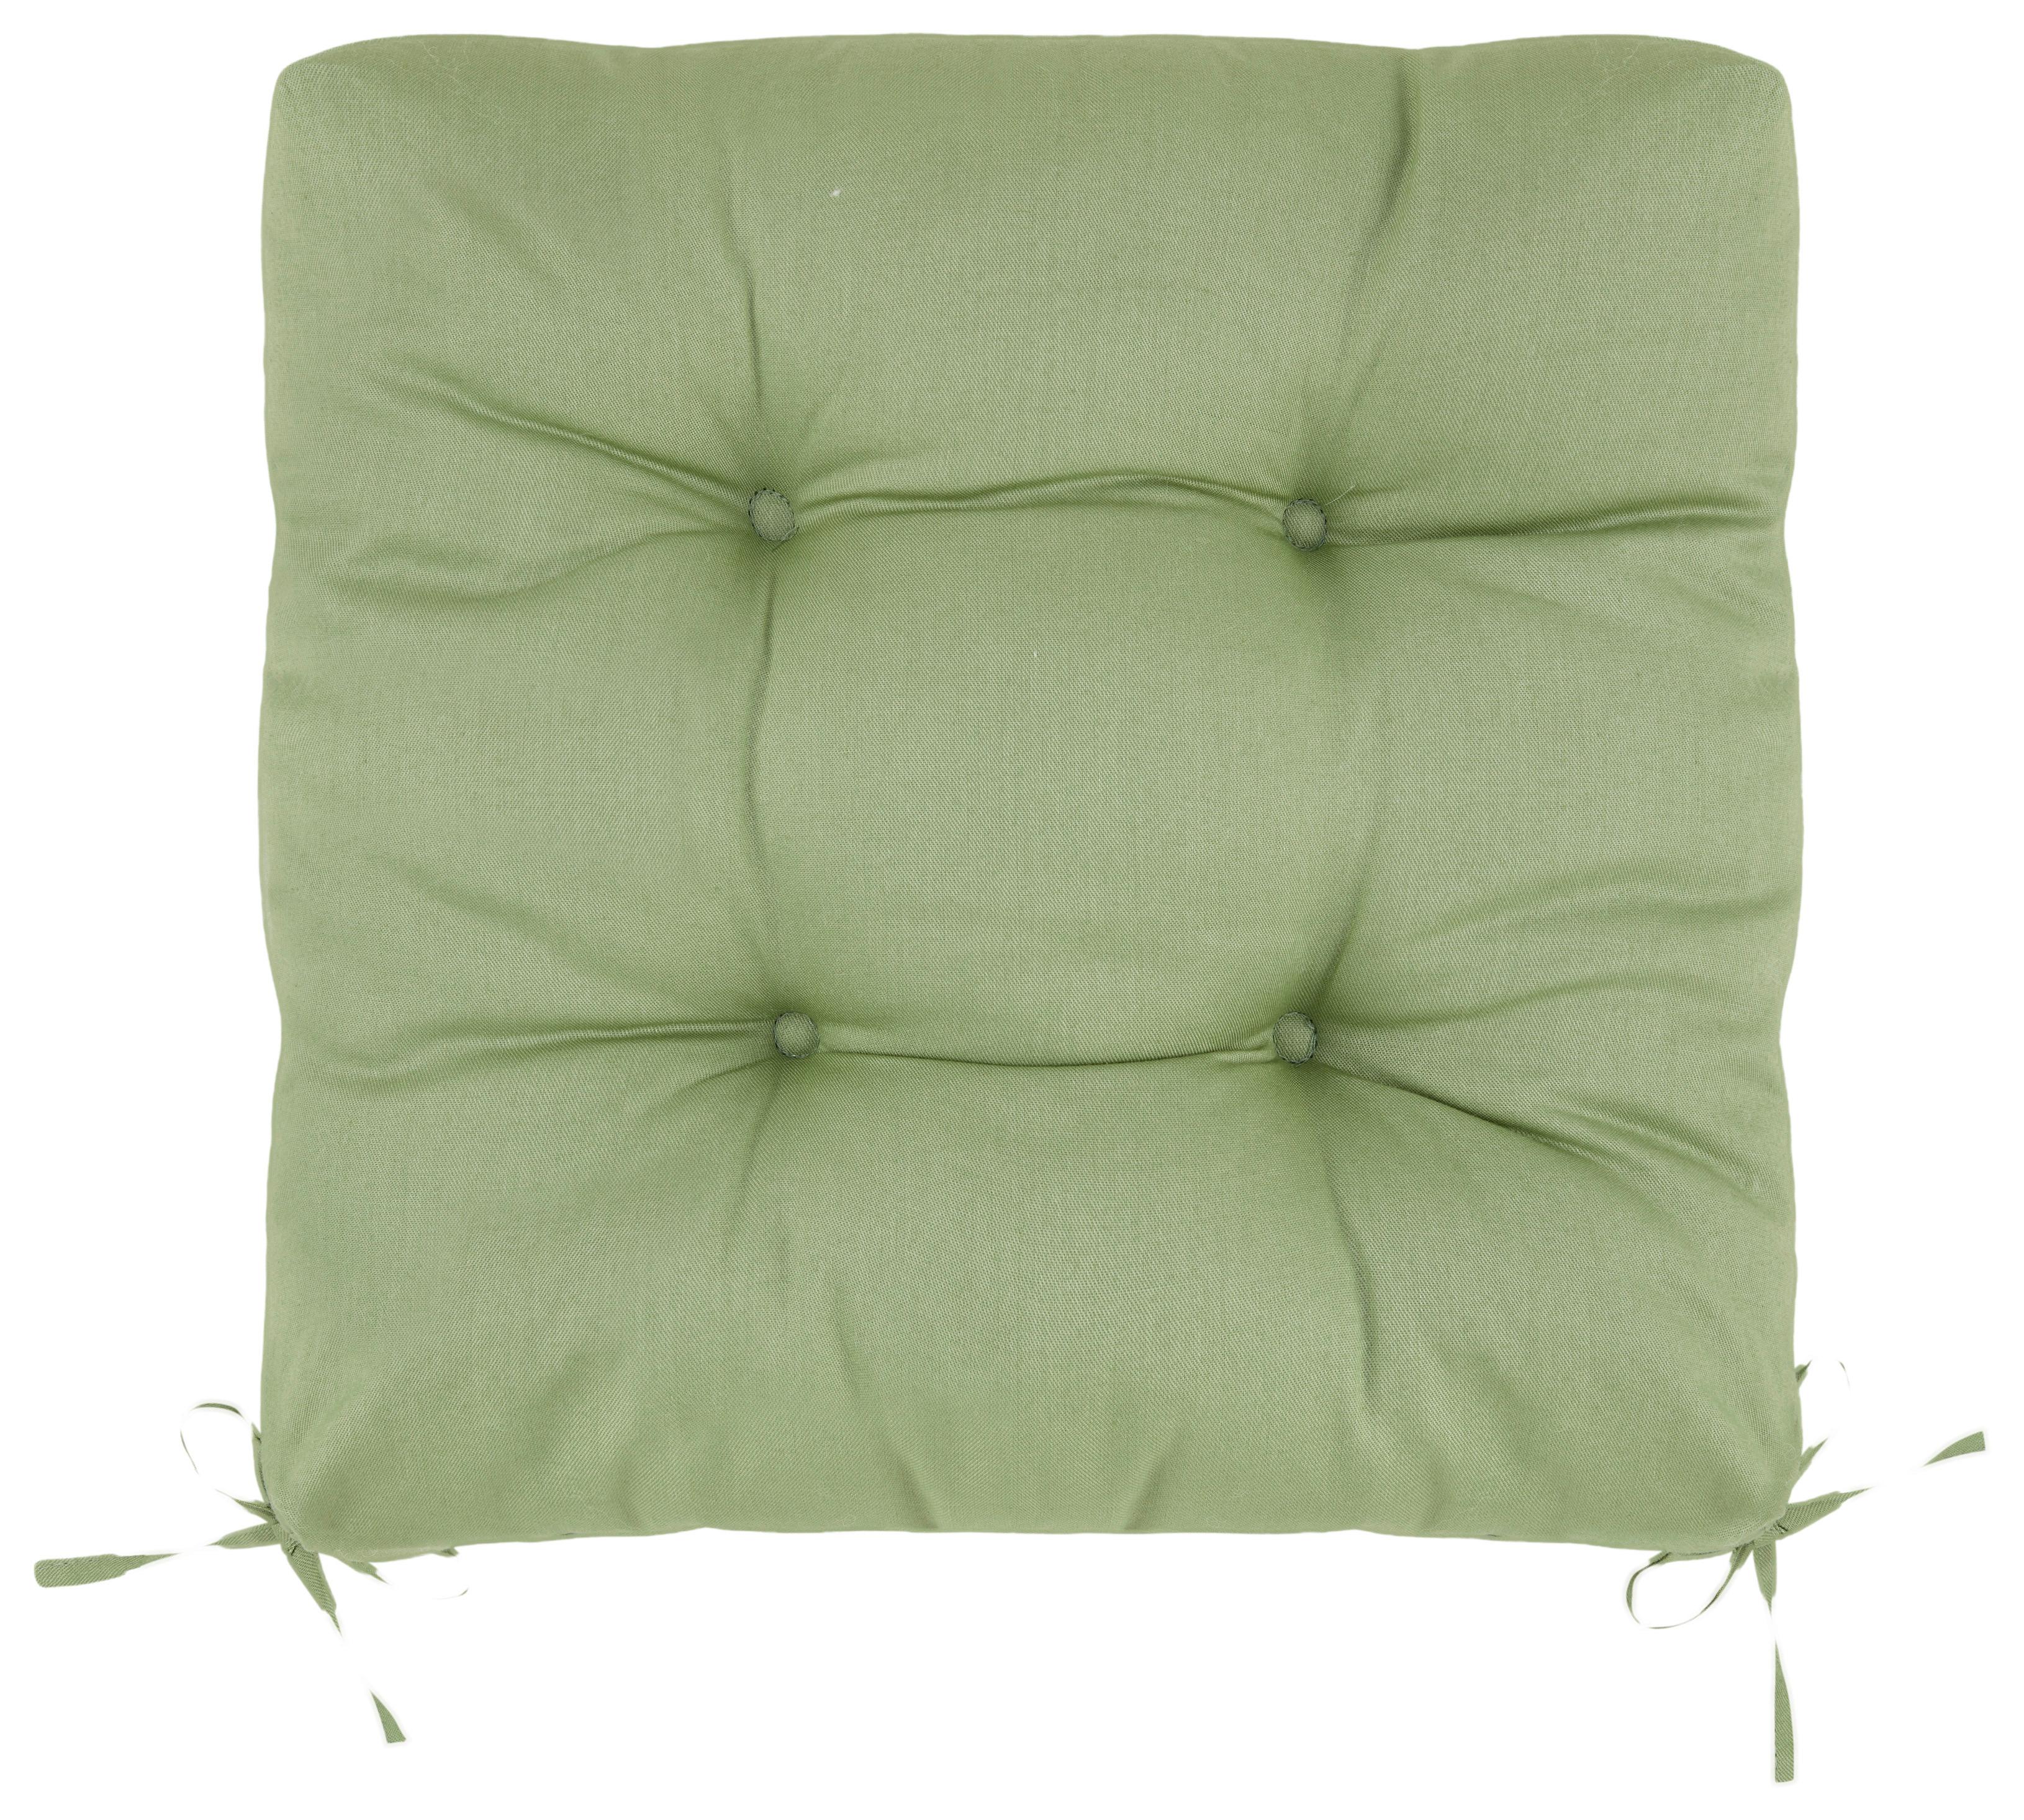 Ülőpárna Elli - Zöld, konvencionális (40/40/7cm) - Modern Living